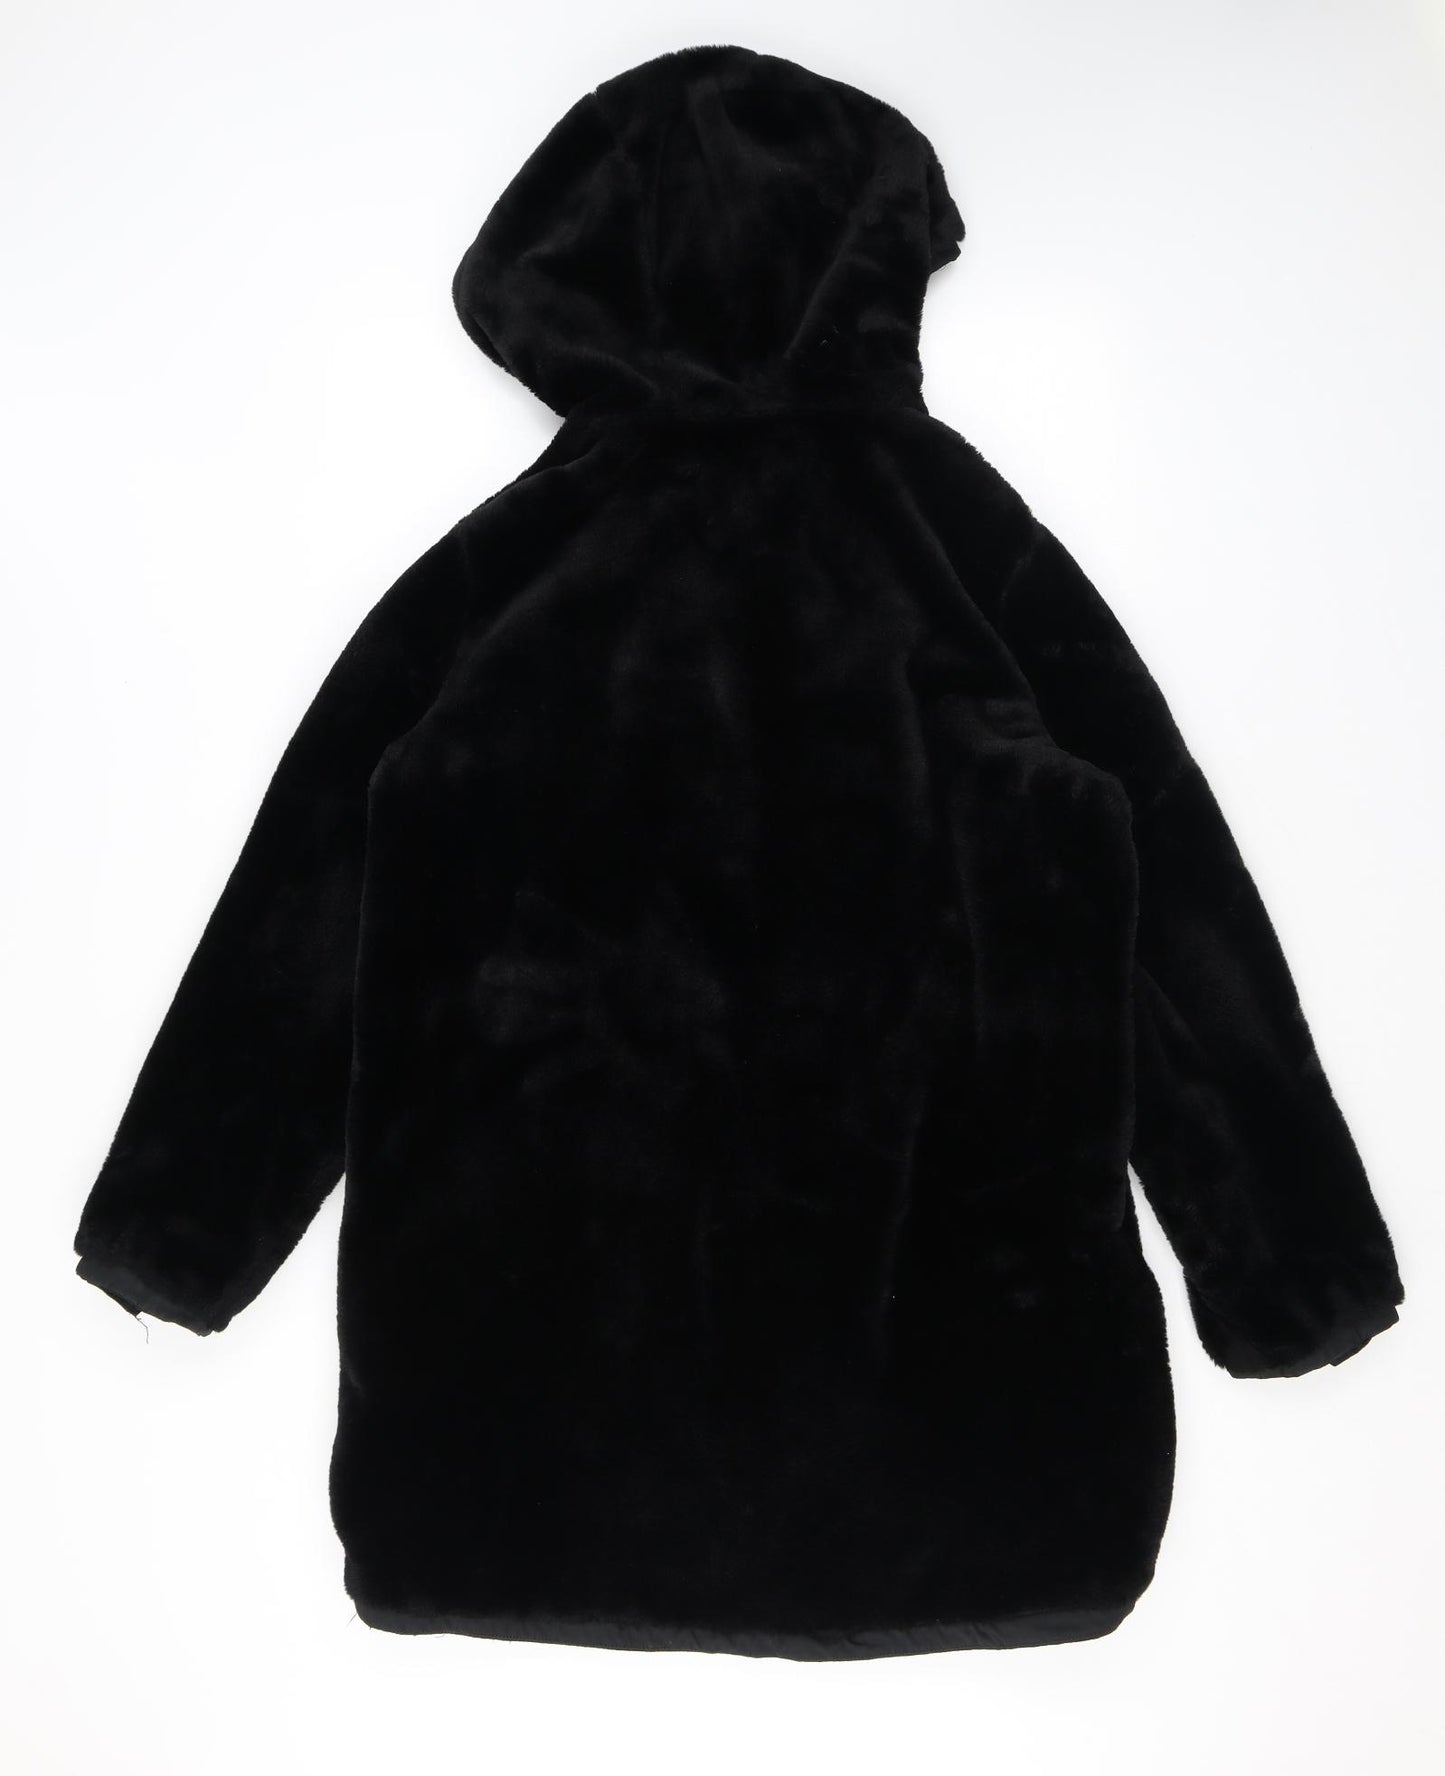 Zara Womens Black Jacket Size S Zip